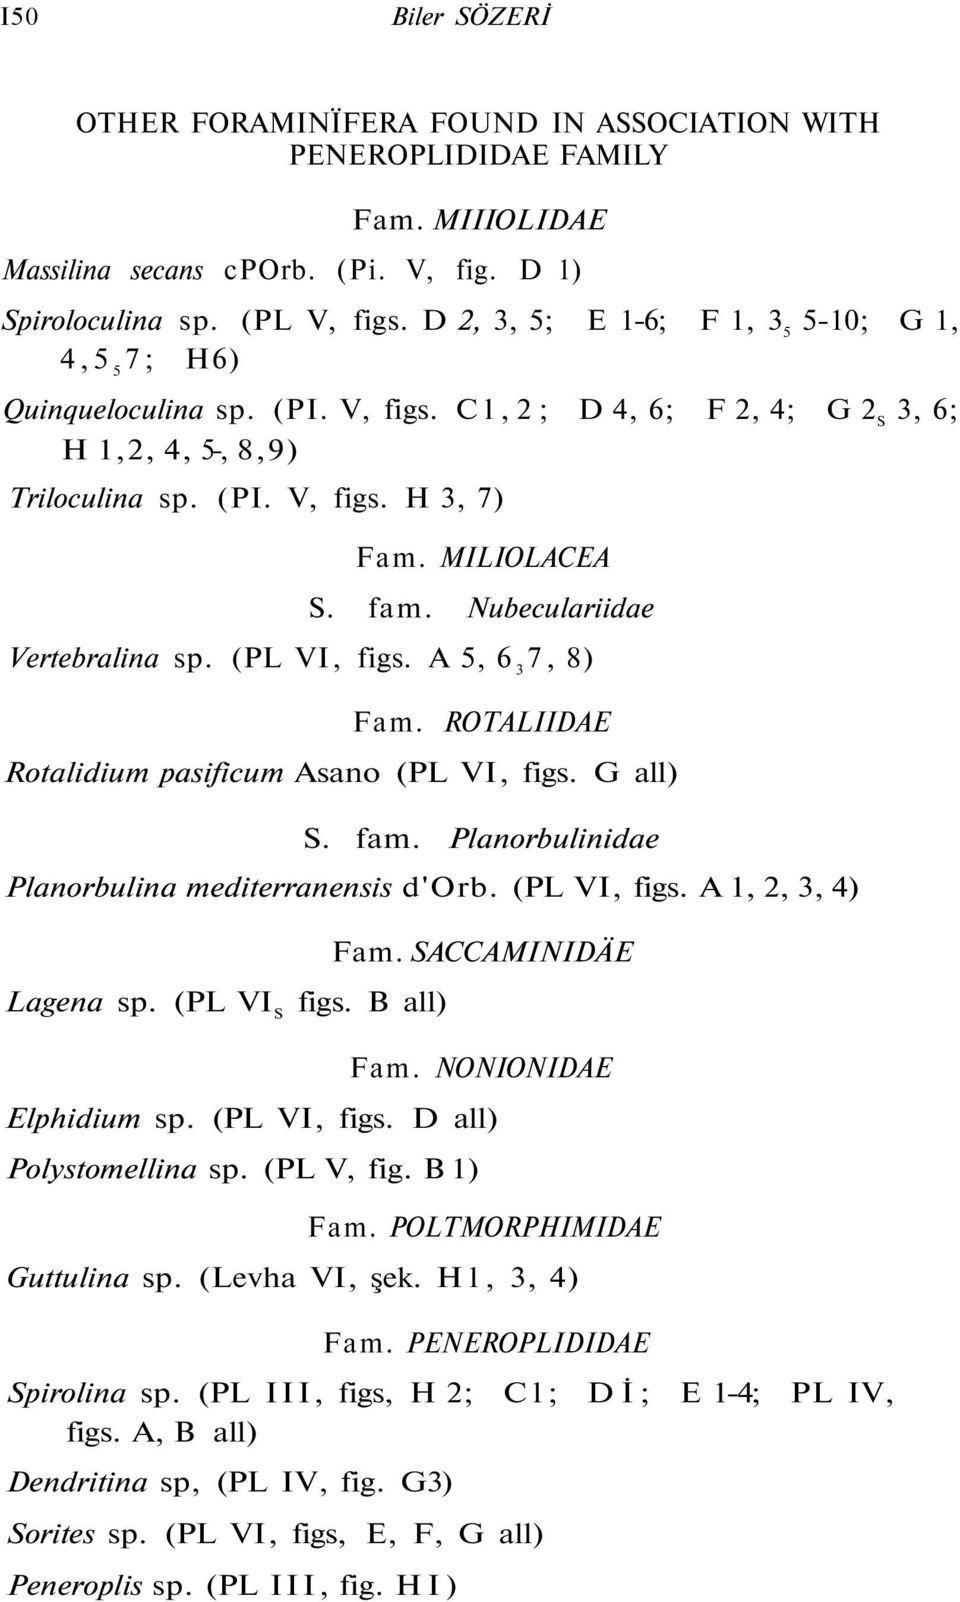 Nubeculariidae Vertebralina sp. (PL VI, figs. A 5, 6 3 7, 8) Fam. ROTALIIDAE Rotalidium pasificum Asano (PL VI, figs. G all) S. fam. Planorbulinidae Planorbulina mediterranensis d'orb. (PL VI, figs. A 1, 2, 3, 4) Lagena sp.